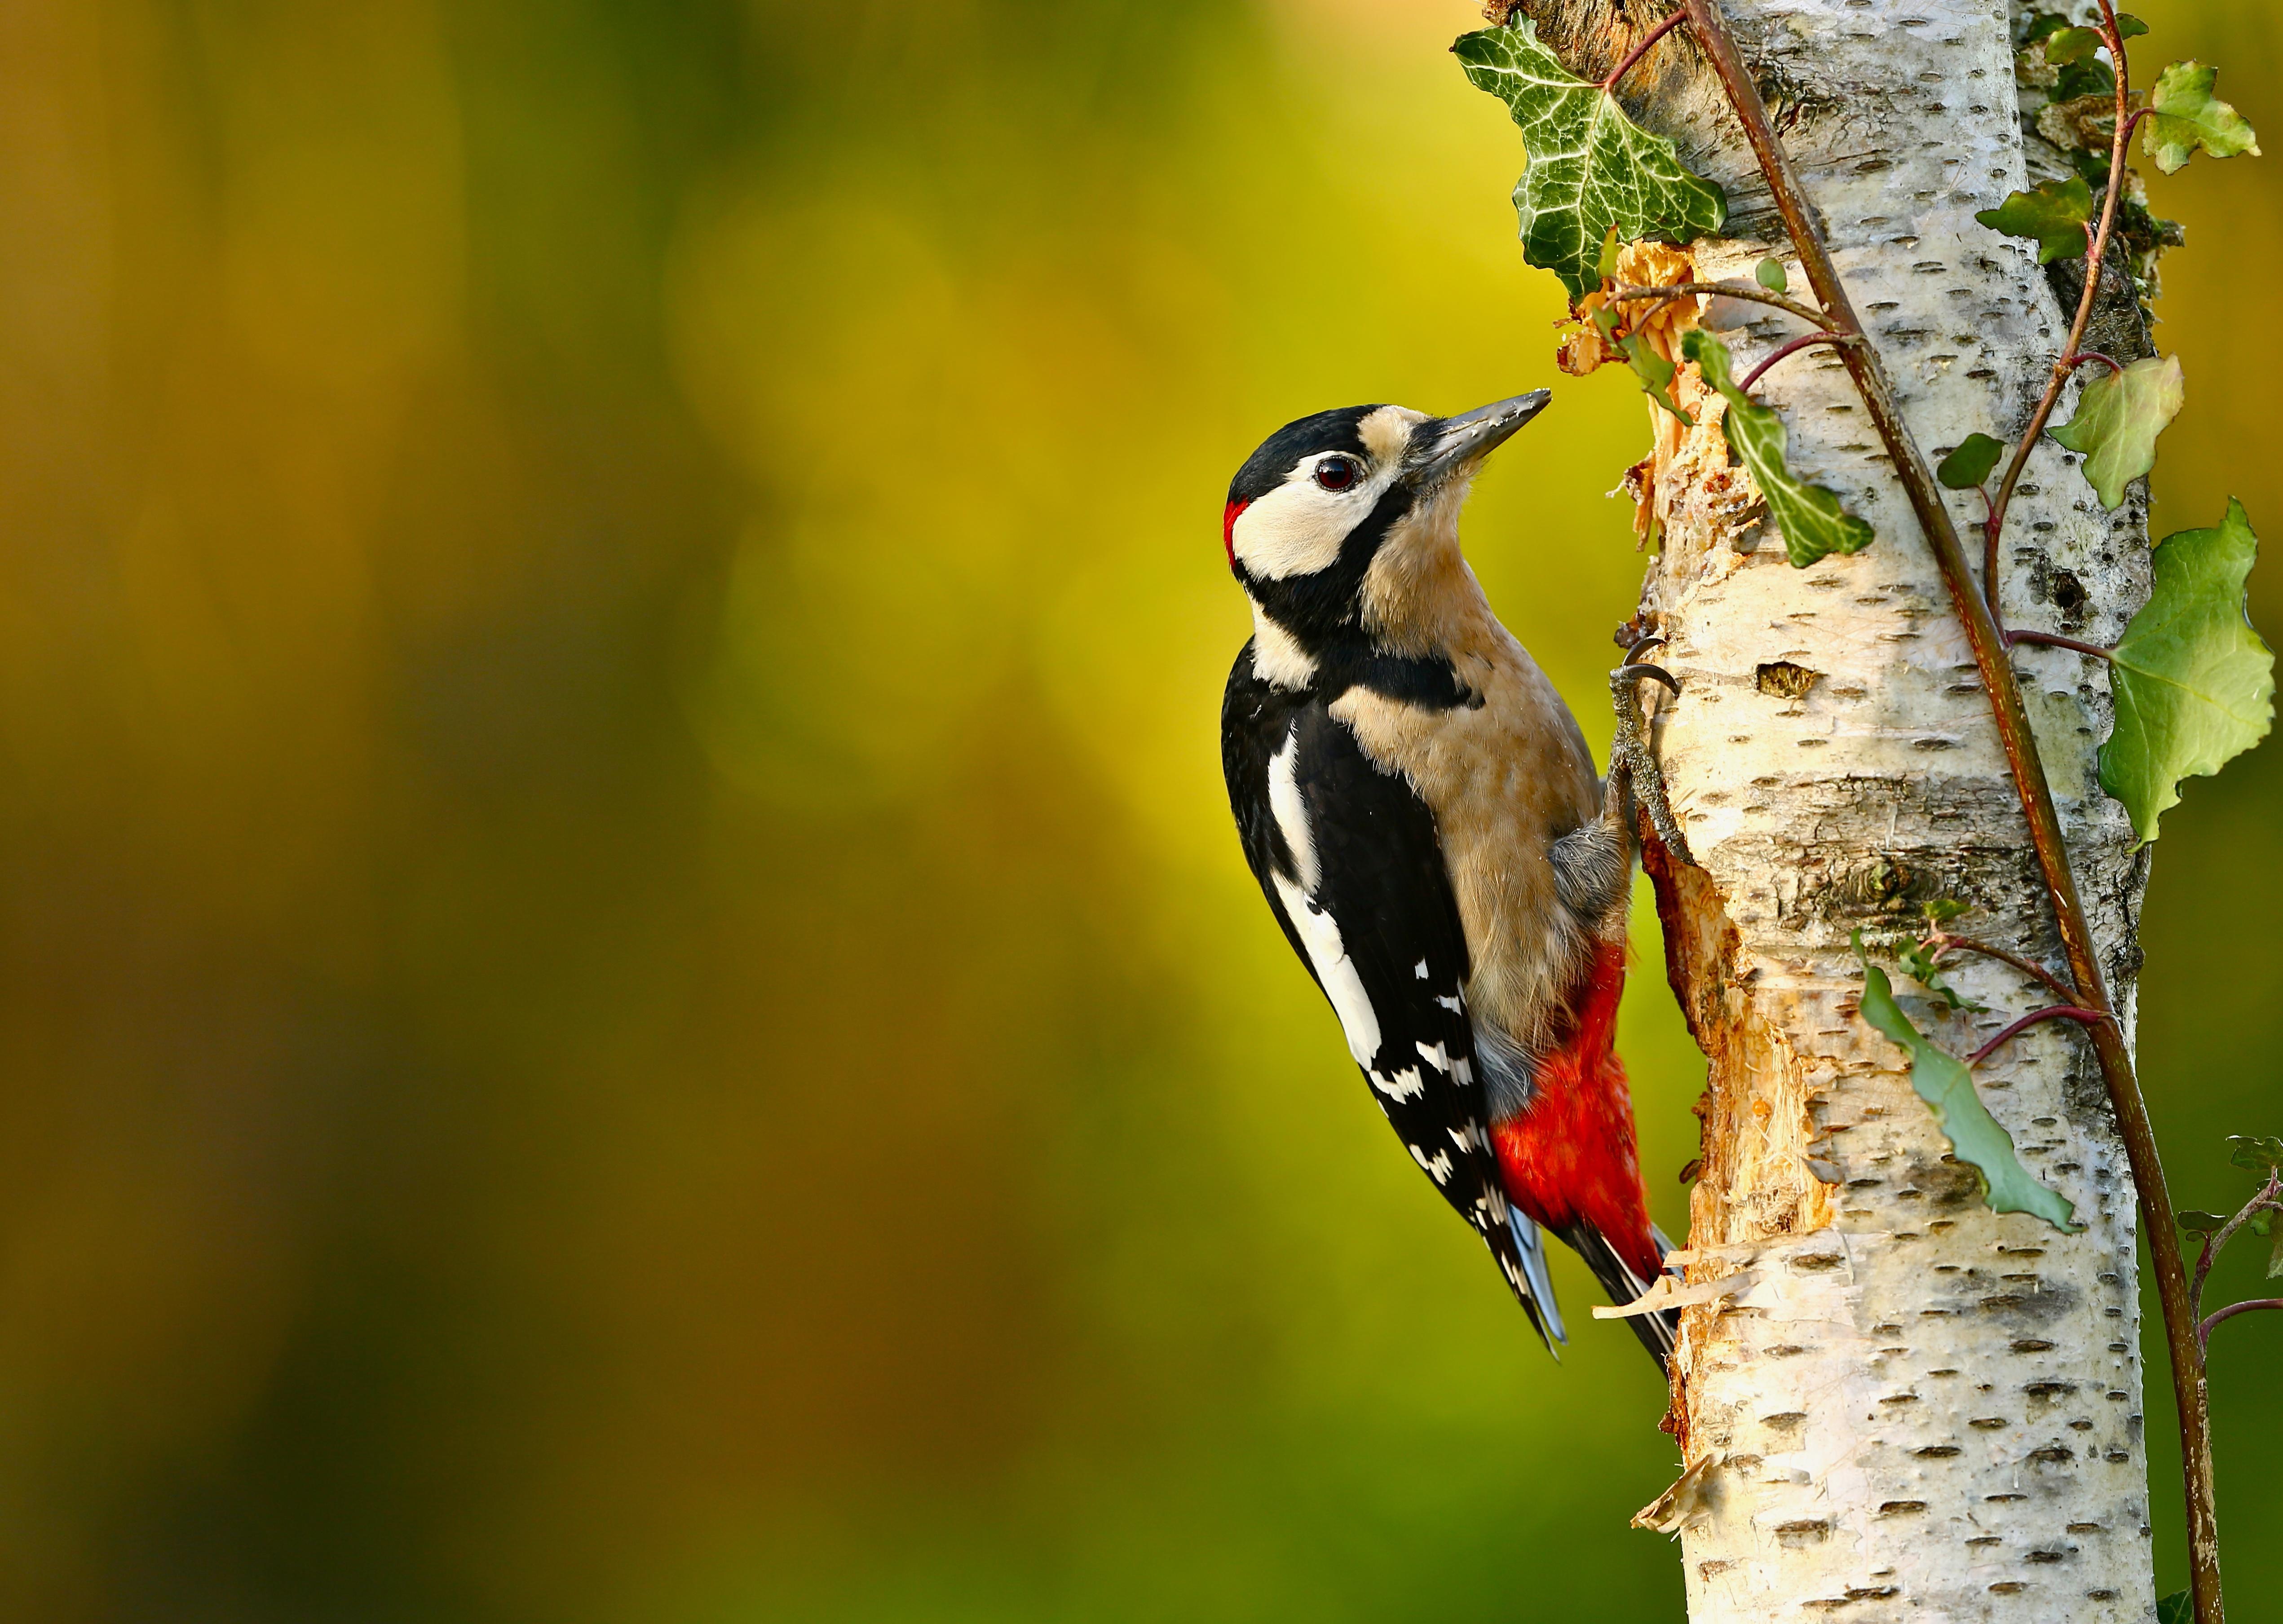 Great Spotted Woodpecker 4k Ultra HD Wallpaper. Background Image